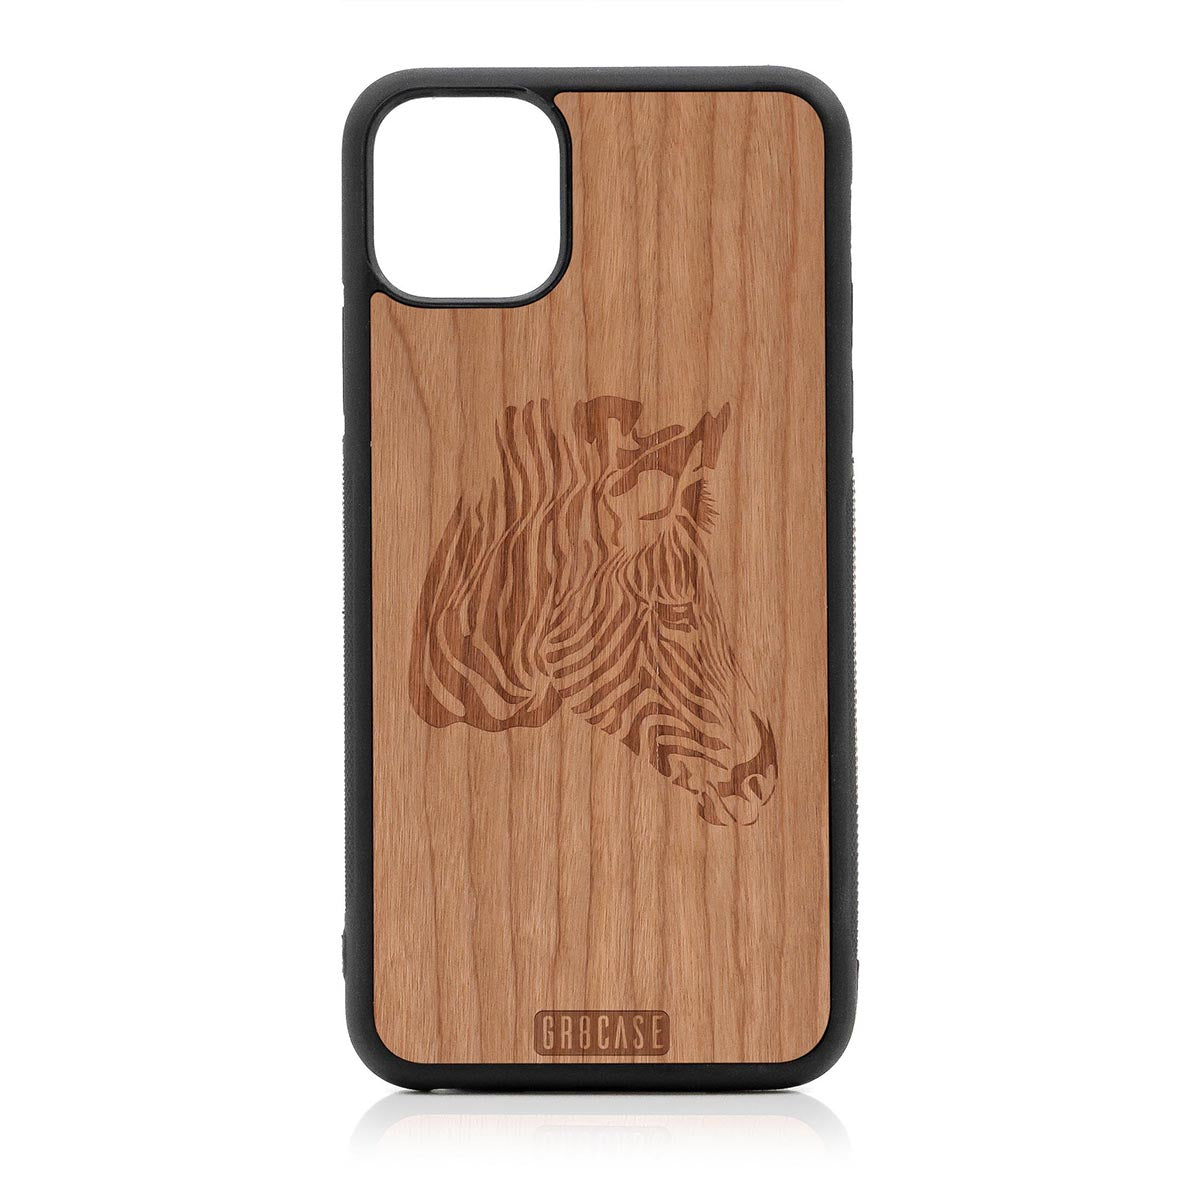 Zebra Design Wood Case For iPhone 11 Pro Max